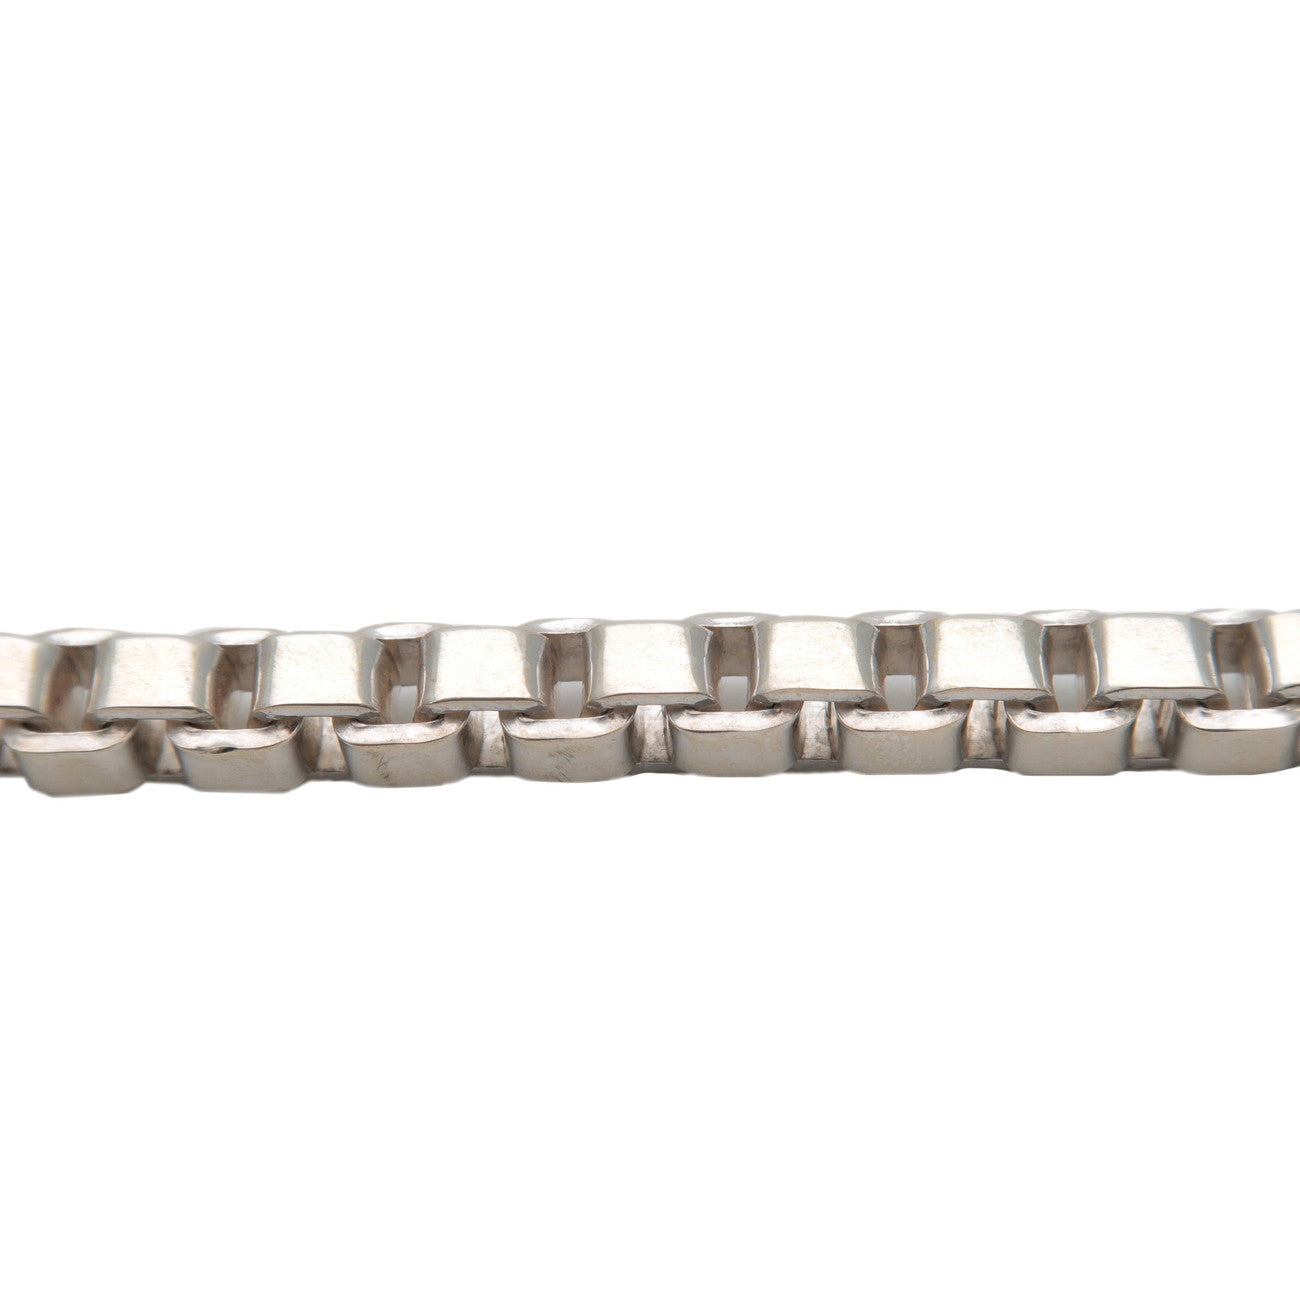 Tiffany&Co. Venetian Link Bracelet SV925 Silver